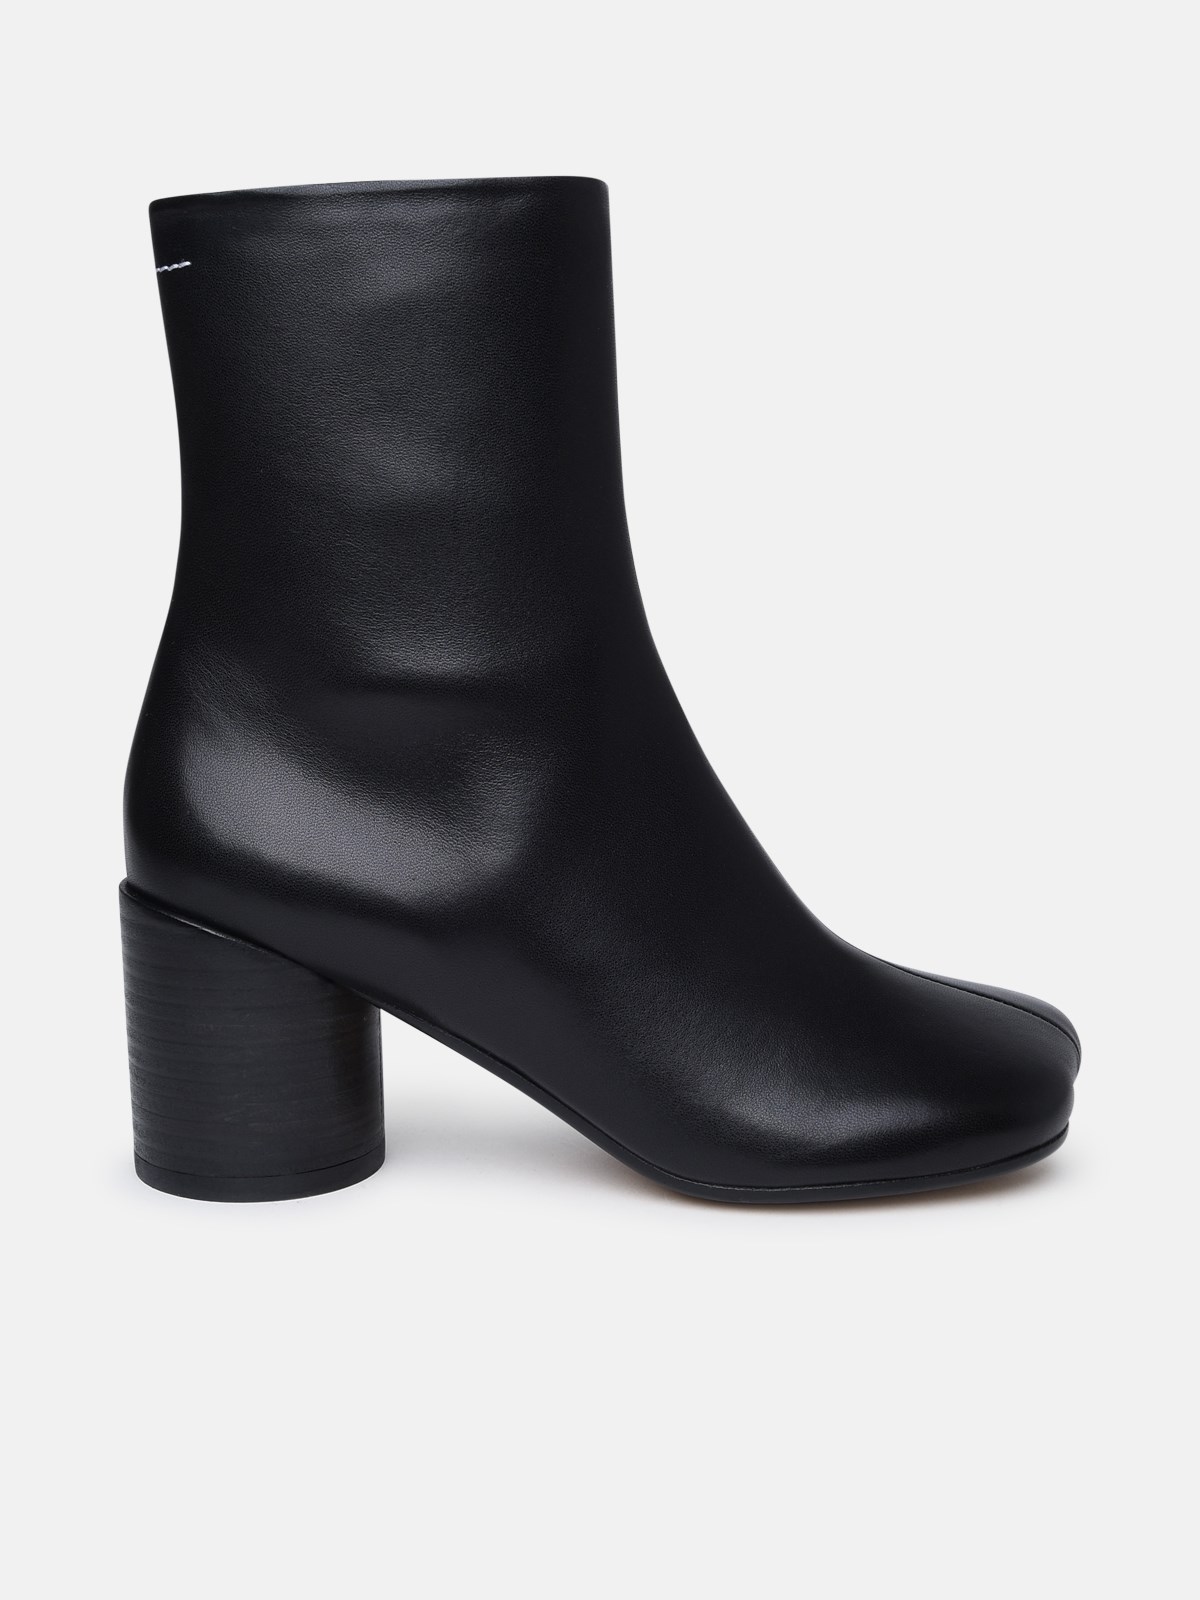 Mm6 Maison Margiela Black Leather Ankle Boots